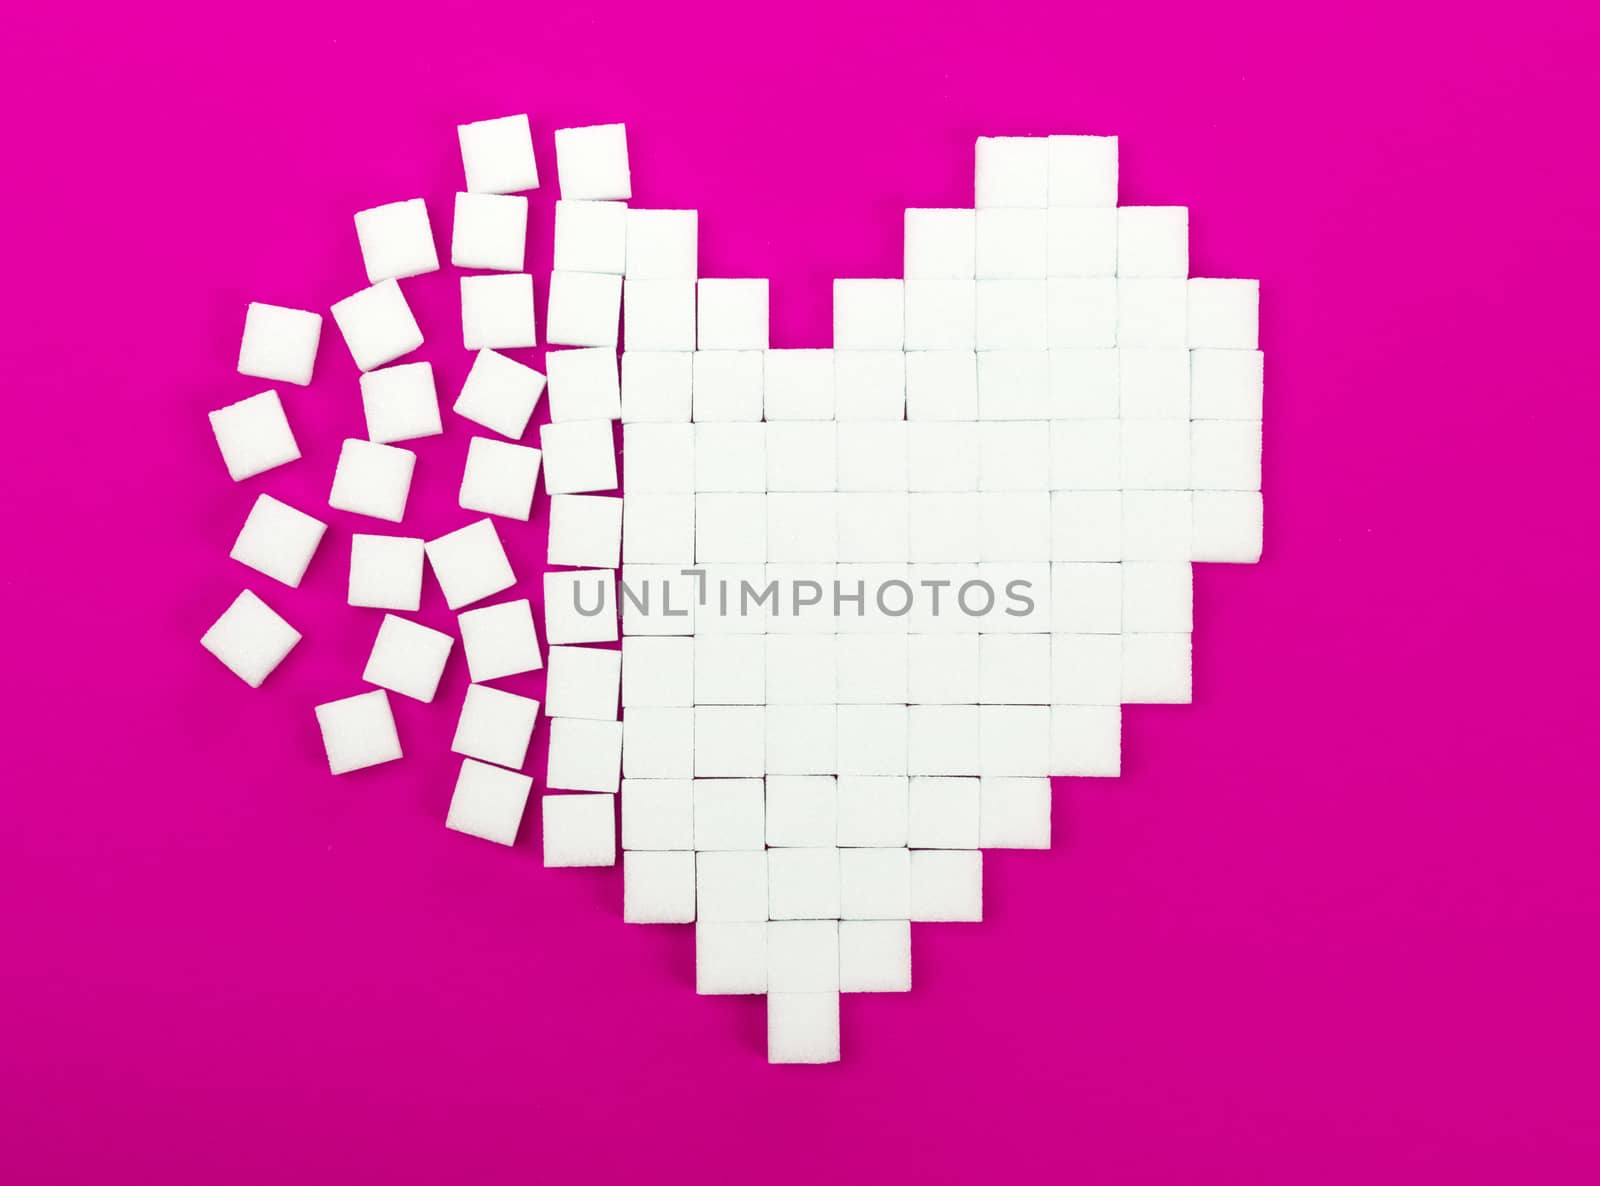 Broken heart made of sugar cubes lies on a trendy pink background